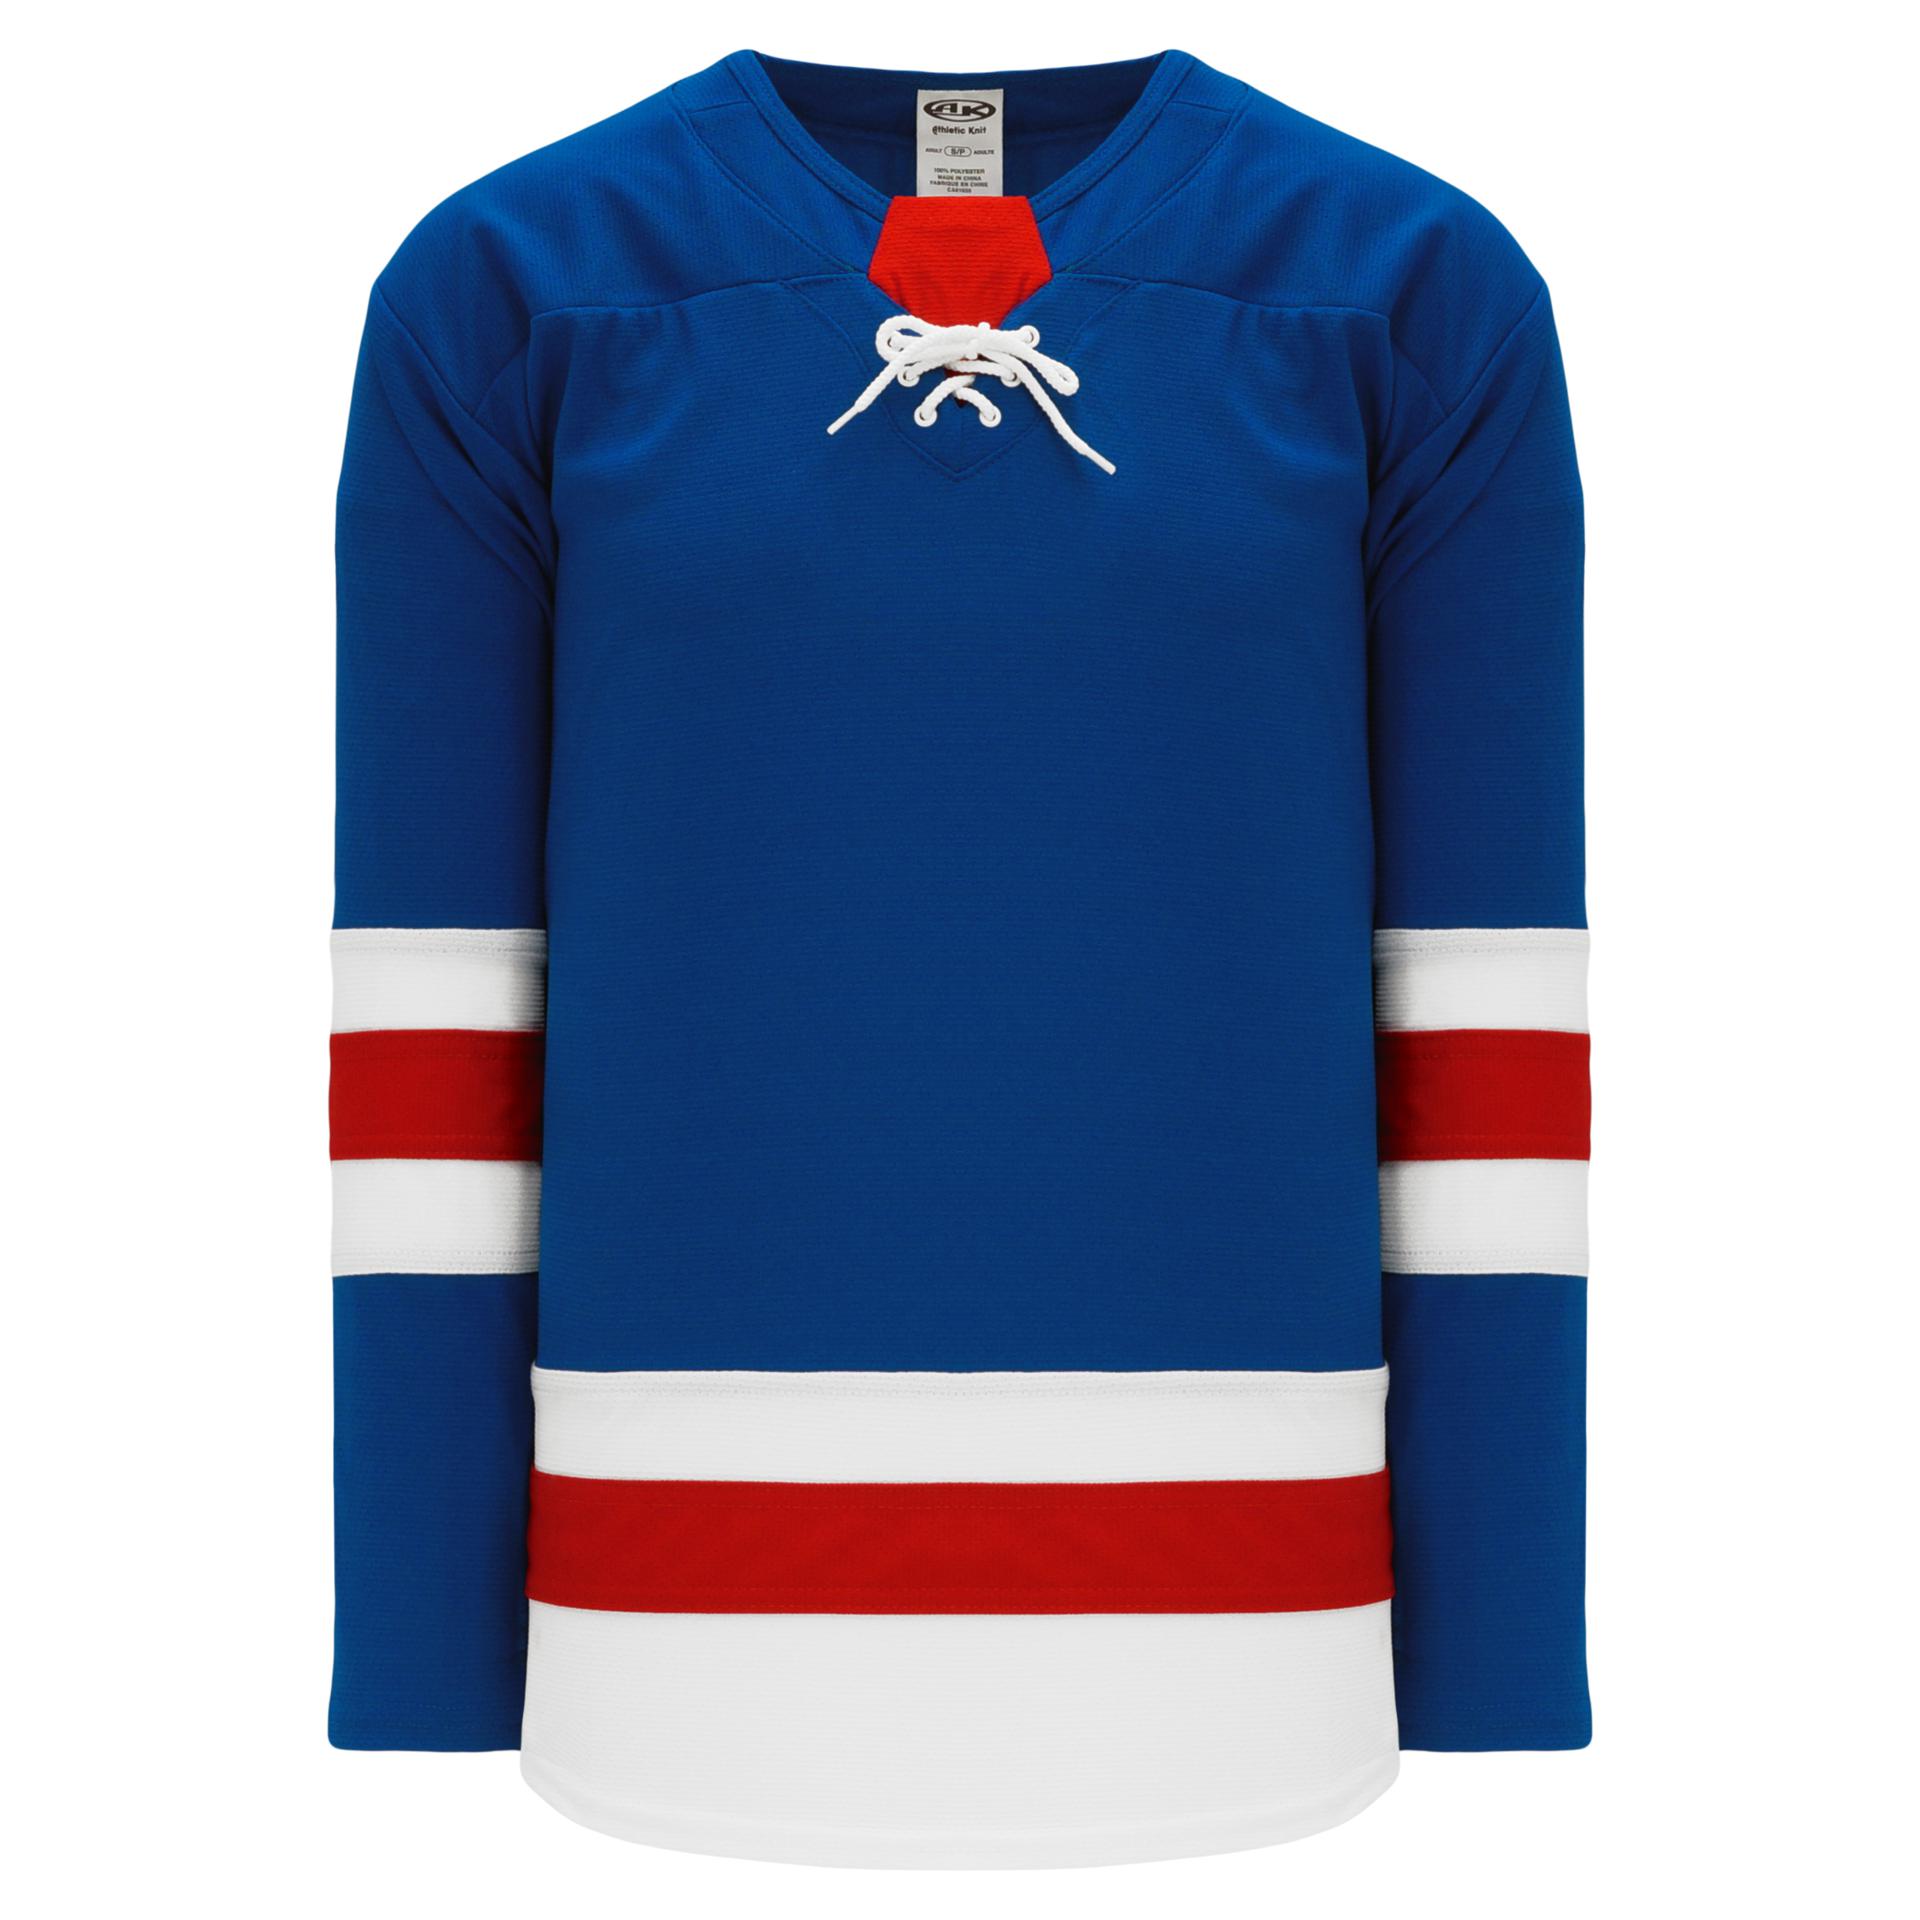 Avs concept jerseys found on /r/hockeyjerseys : r/ColoradoAvalanche